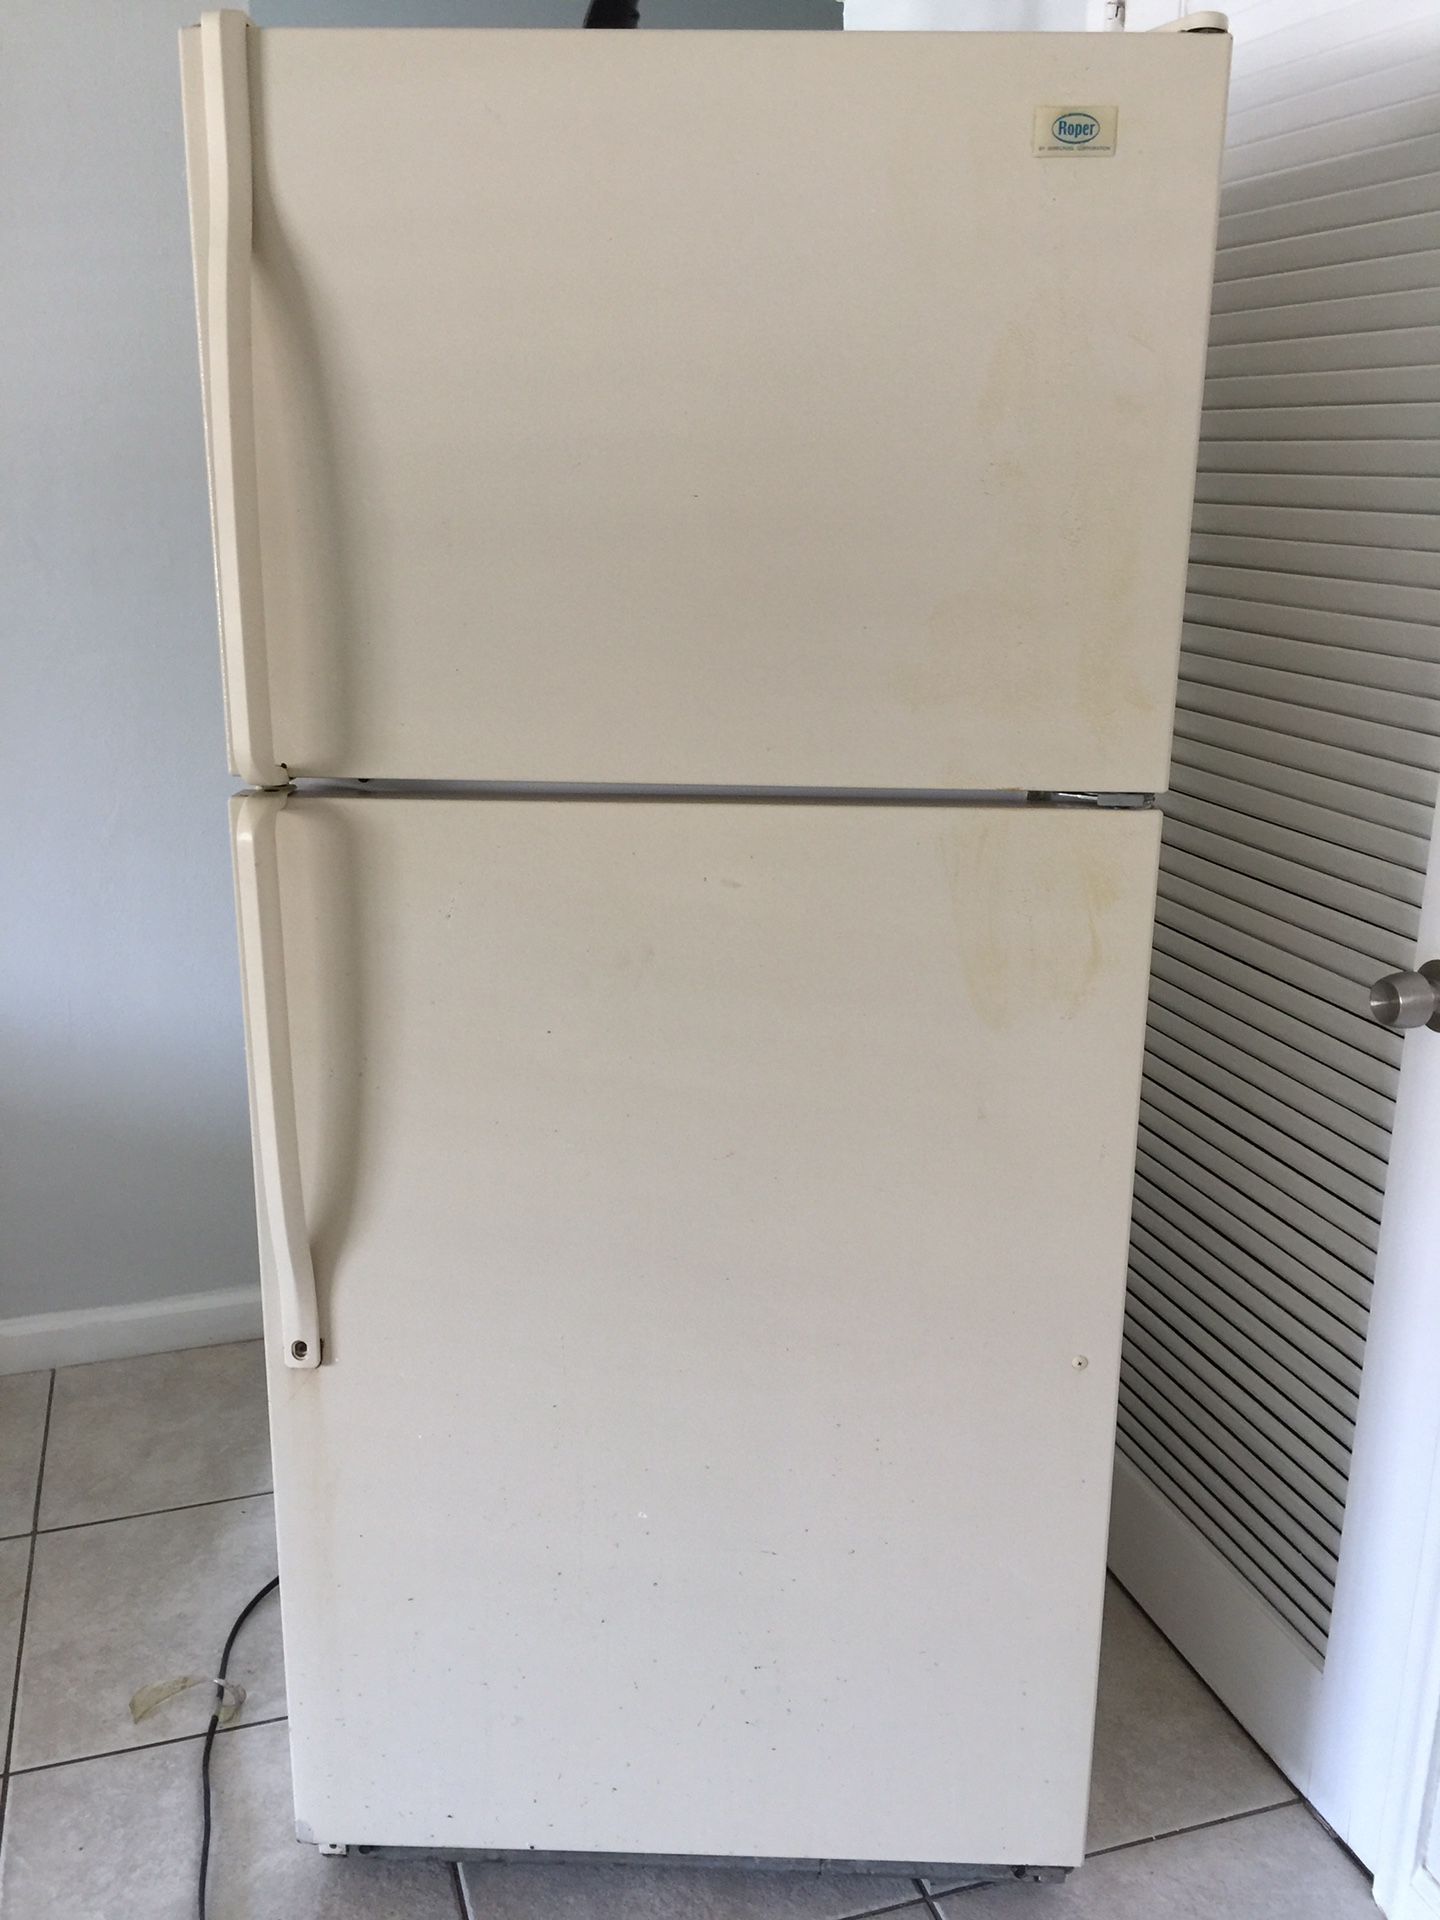 Whirlpool 30 inch refrigerator almond color